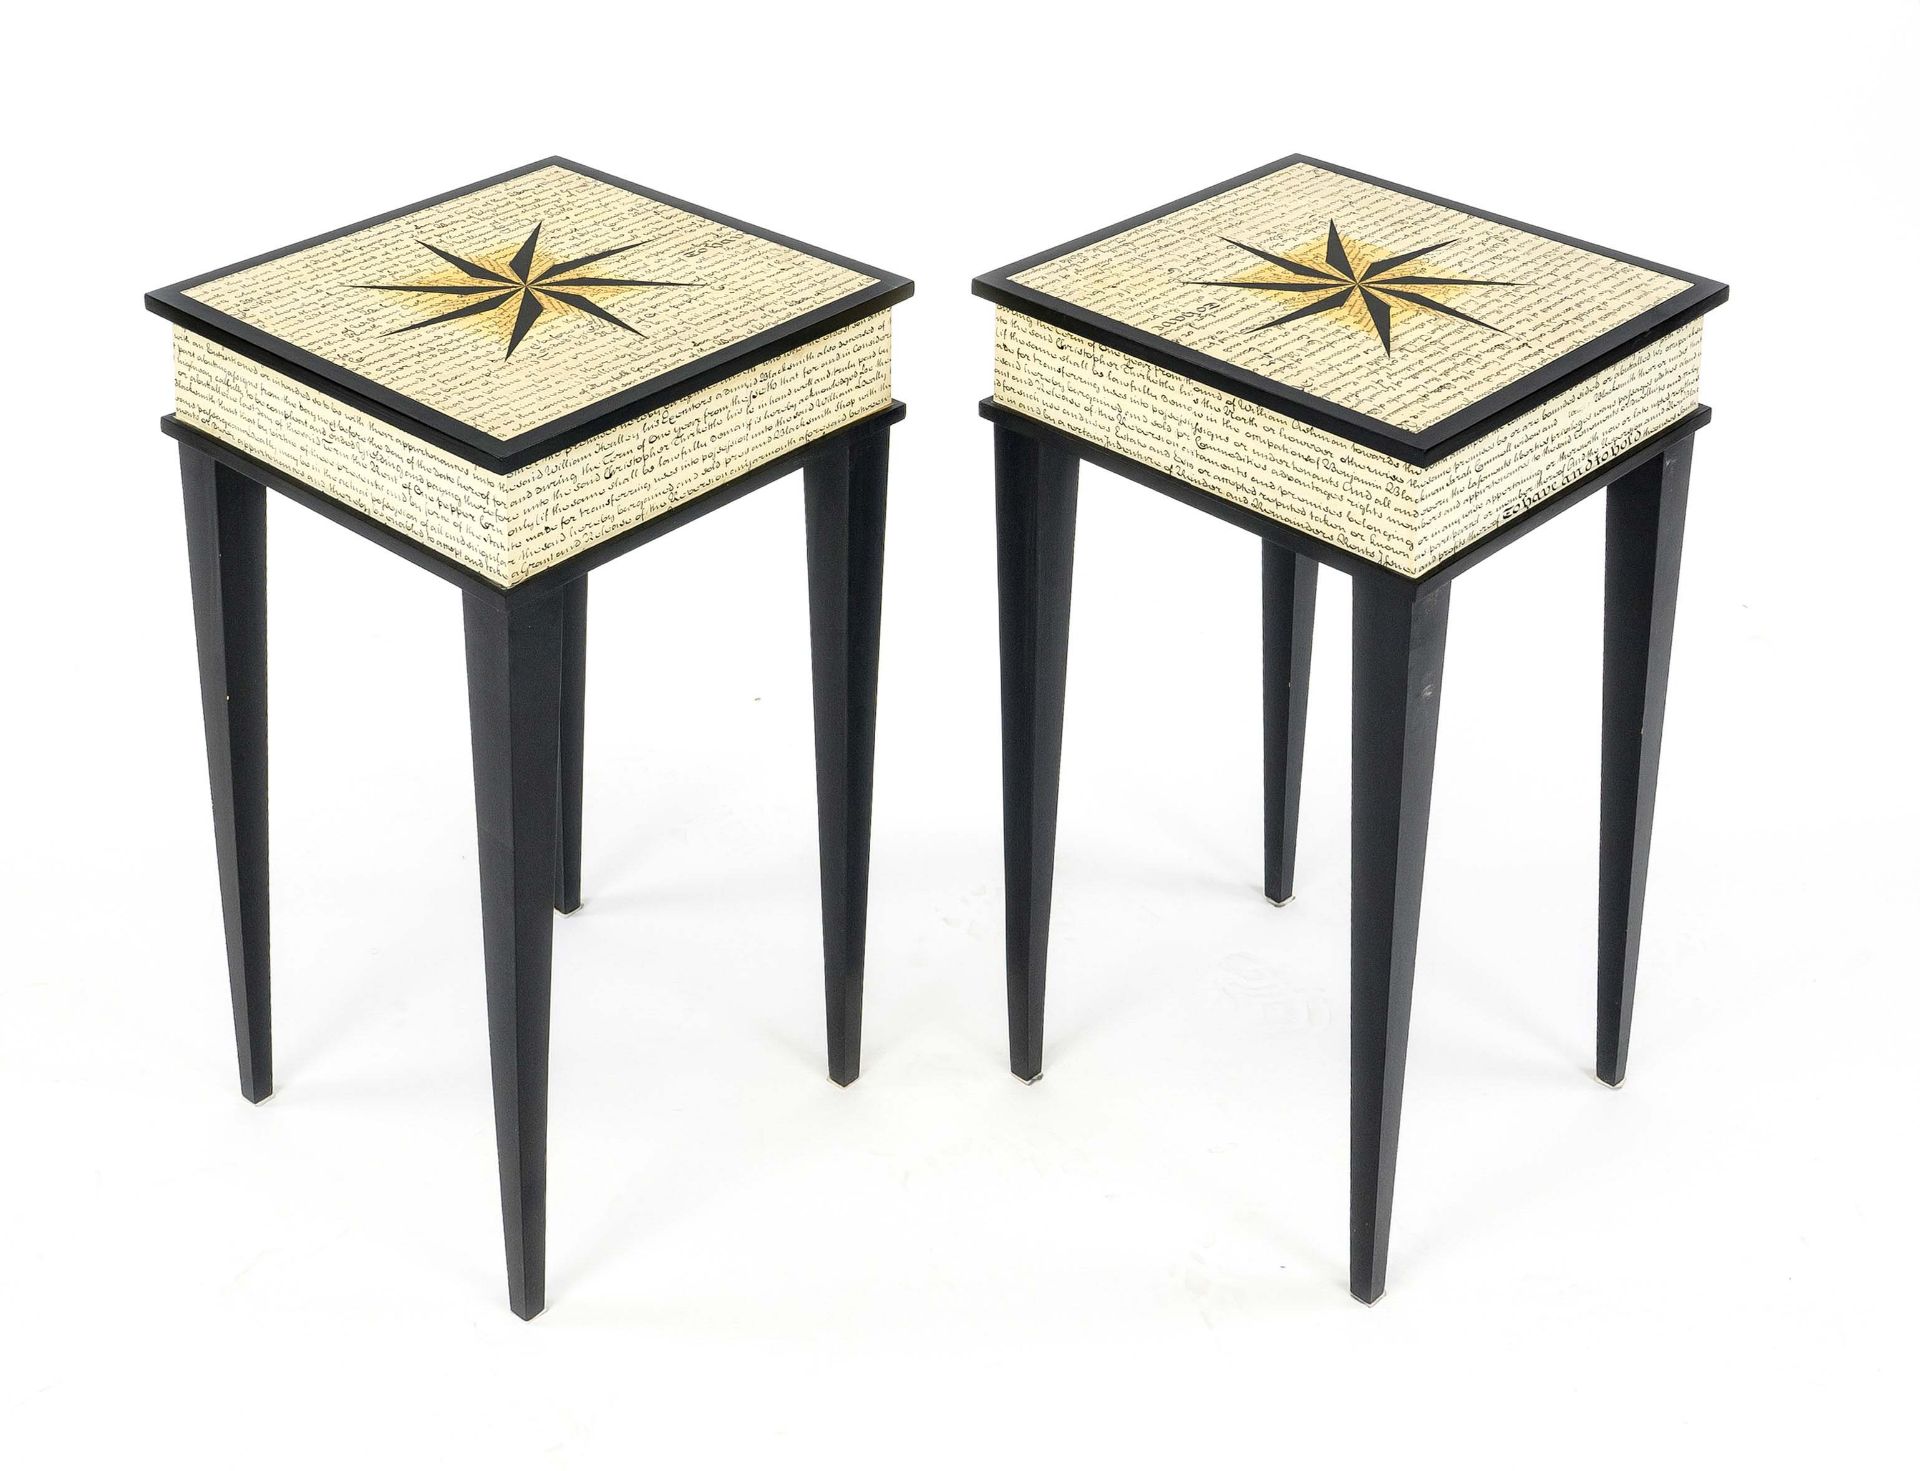 Pair of designer side tables, 21st century, Cherry Harrison, blackened hardwood, all-round lettering